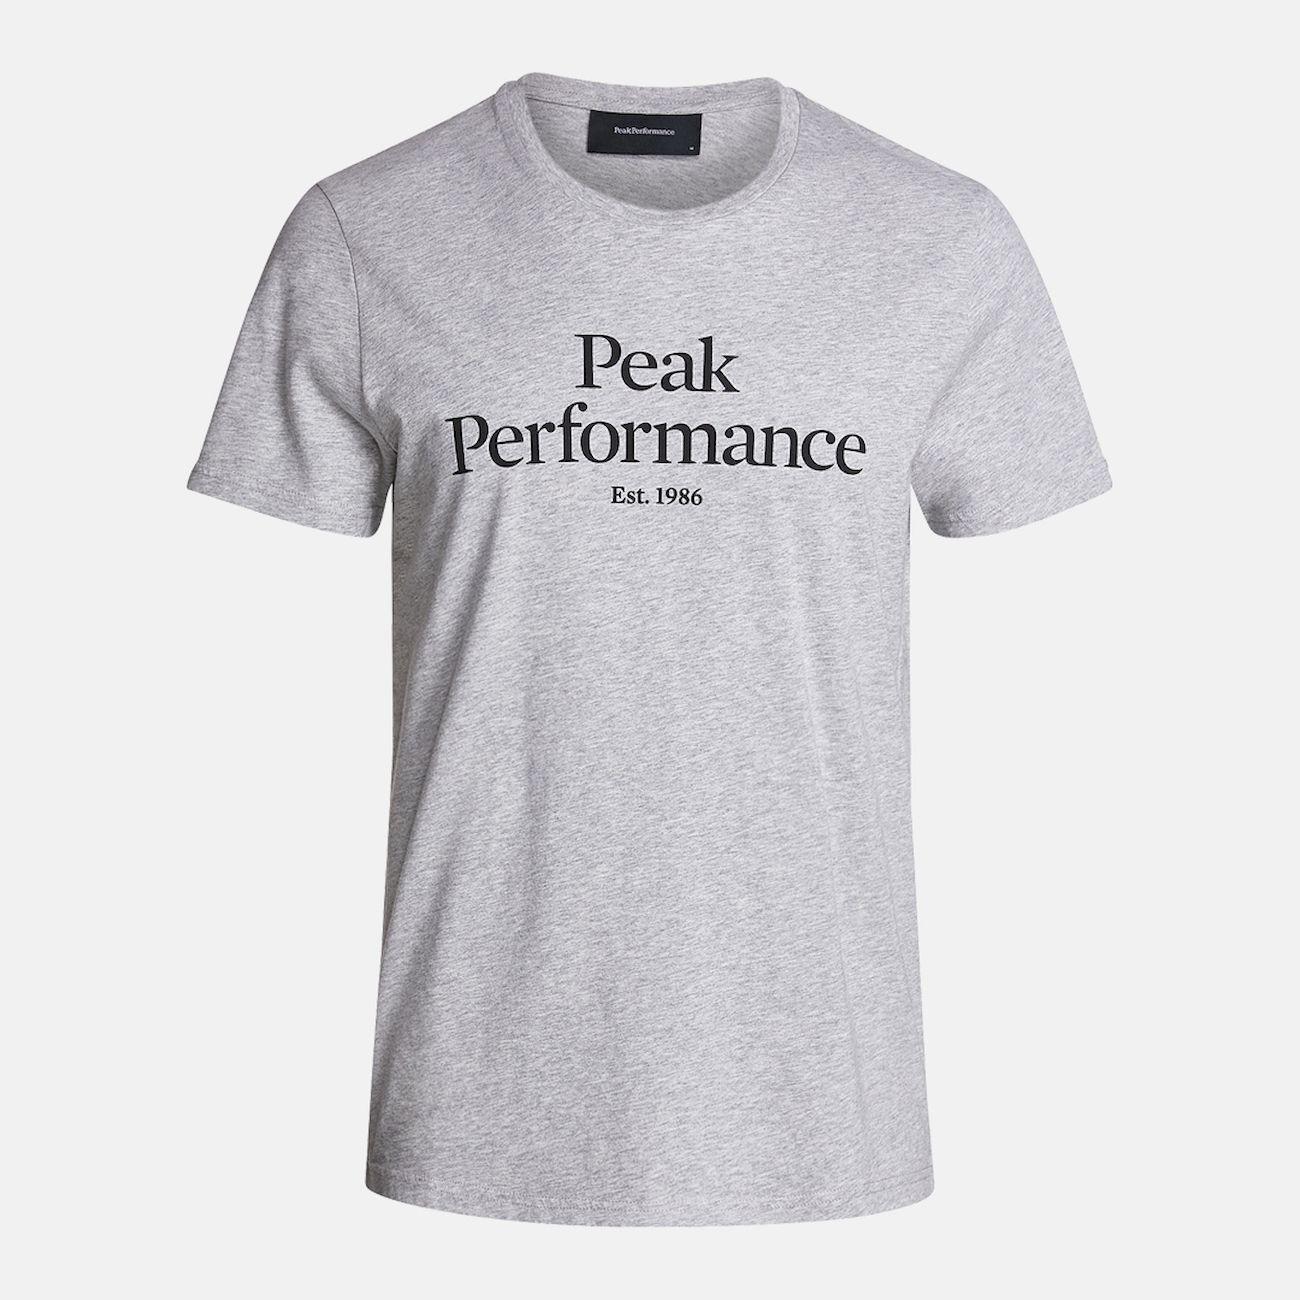 Peak Performance Original Tee - Camiseta - Hombre